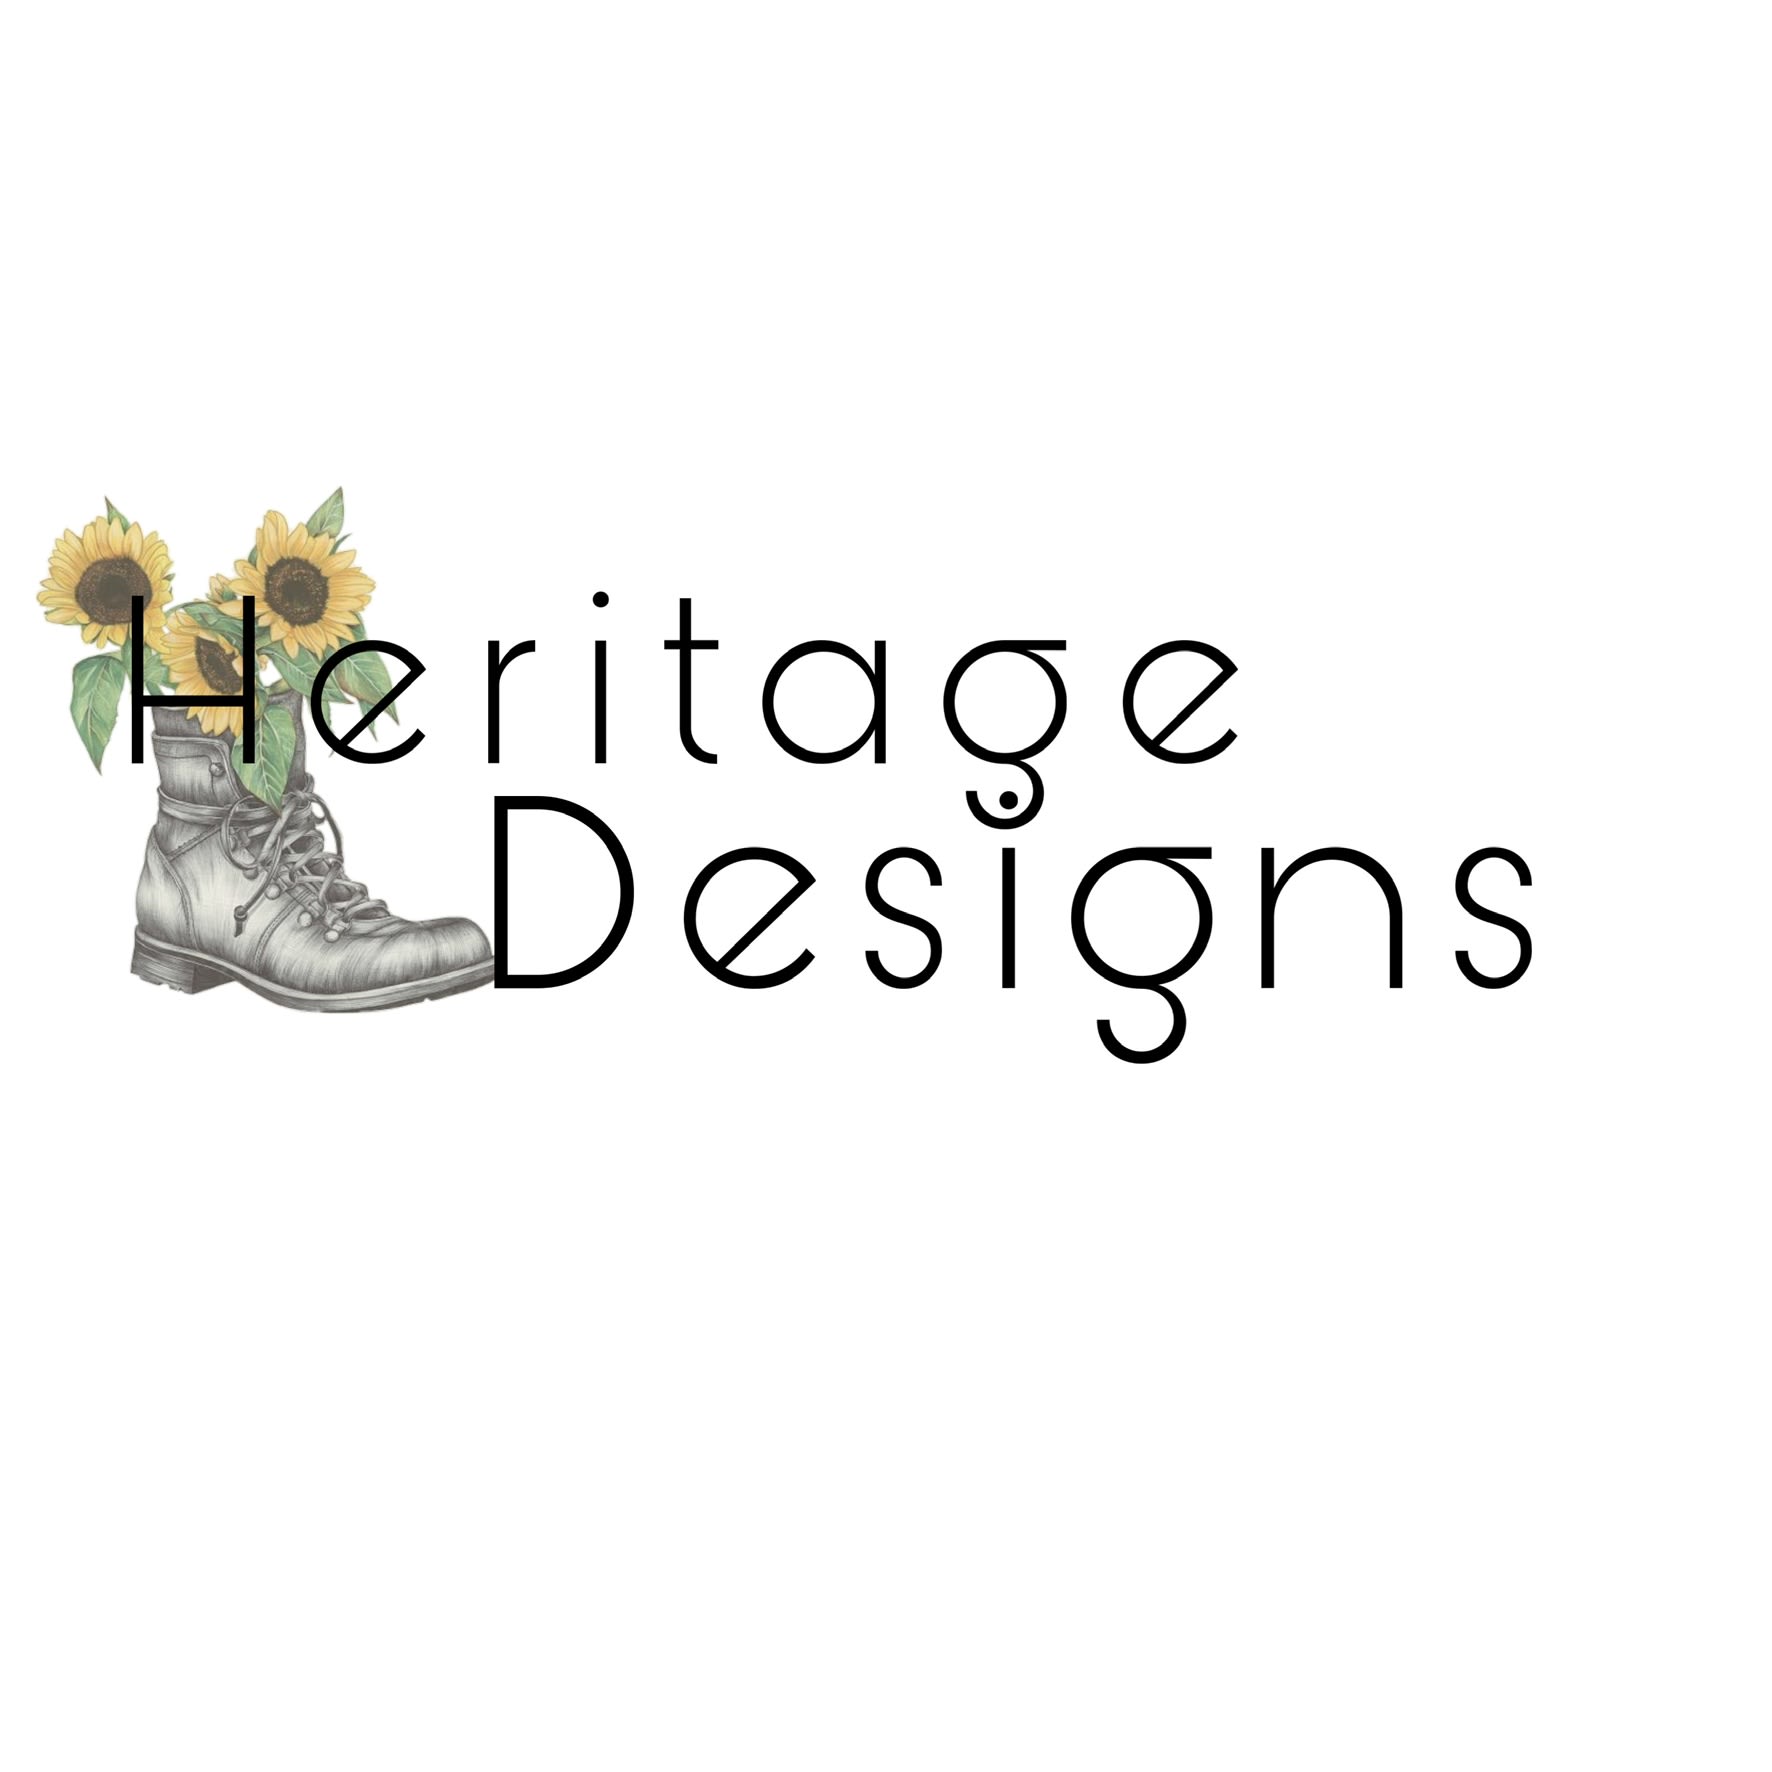 Heritage Designs Mission